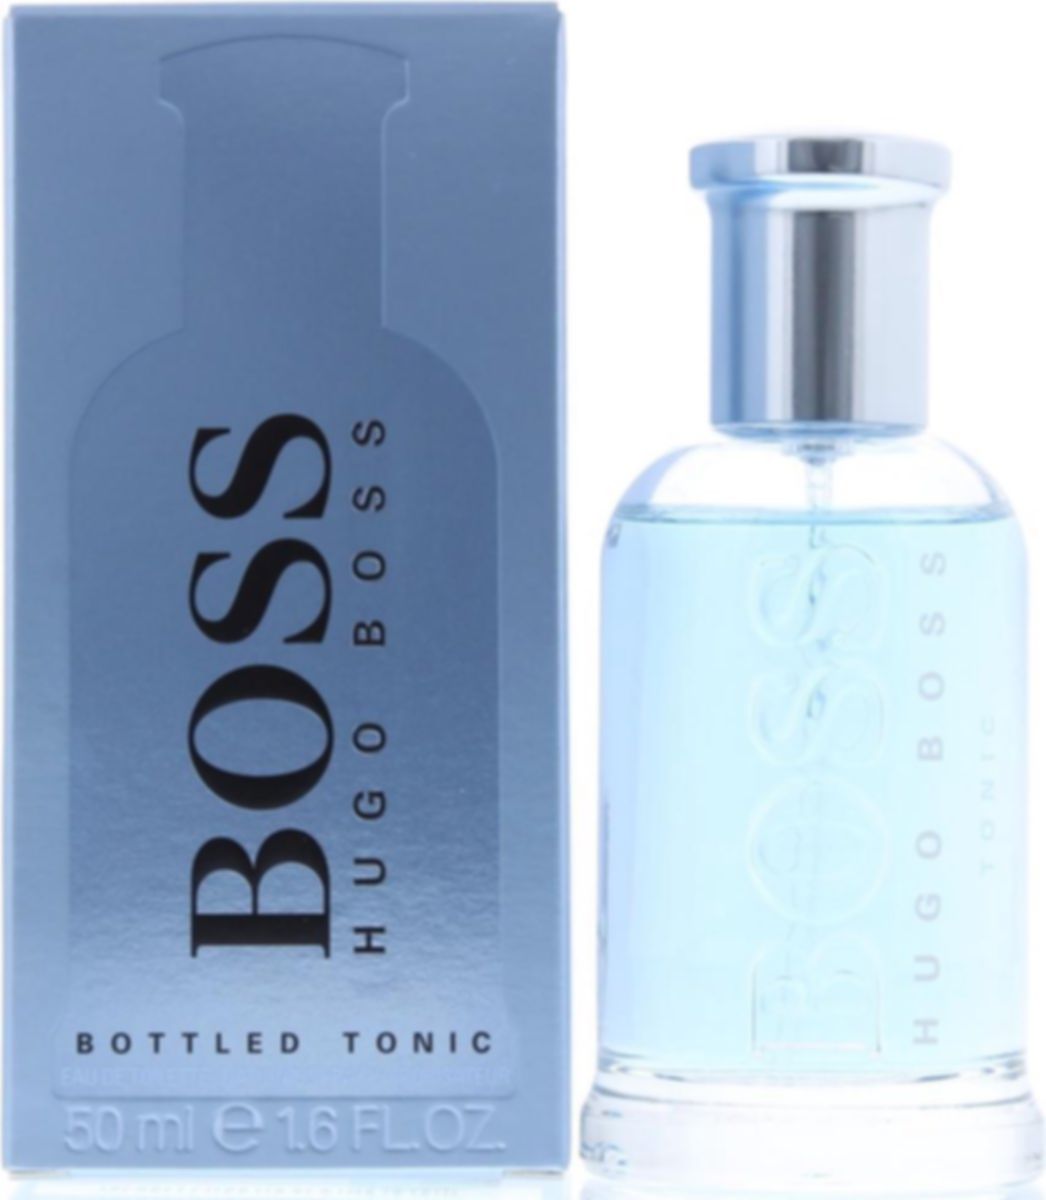 Hugo Boss Bottled Tonic Eau de toilette boîte